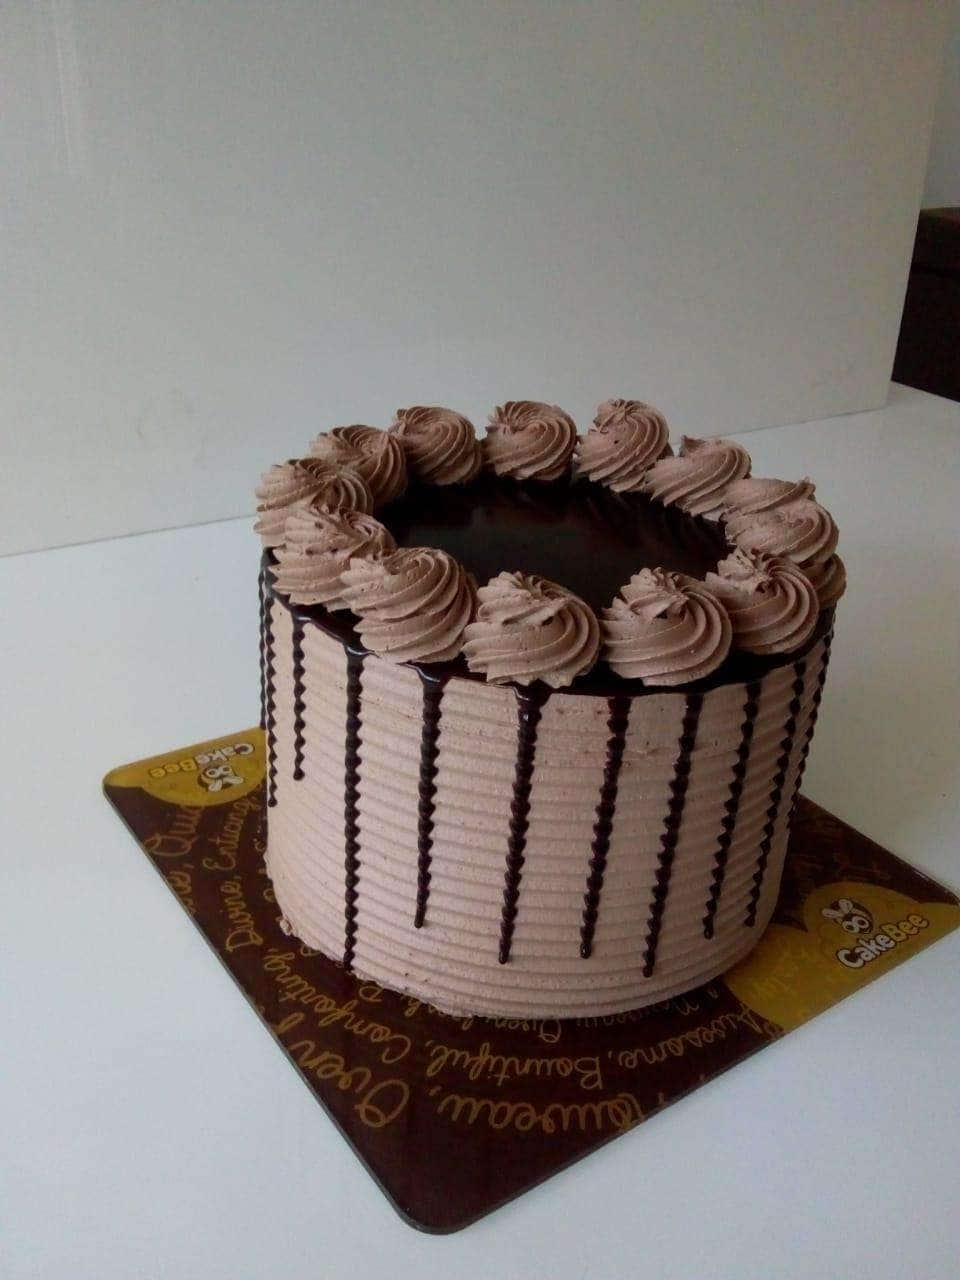 CakeBee, Peelamedu, Coimbatore | Zomato